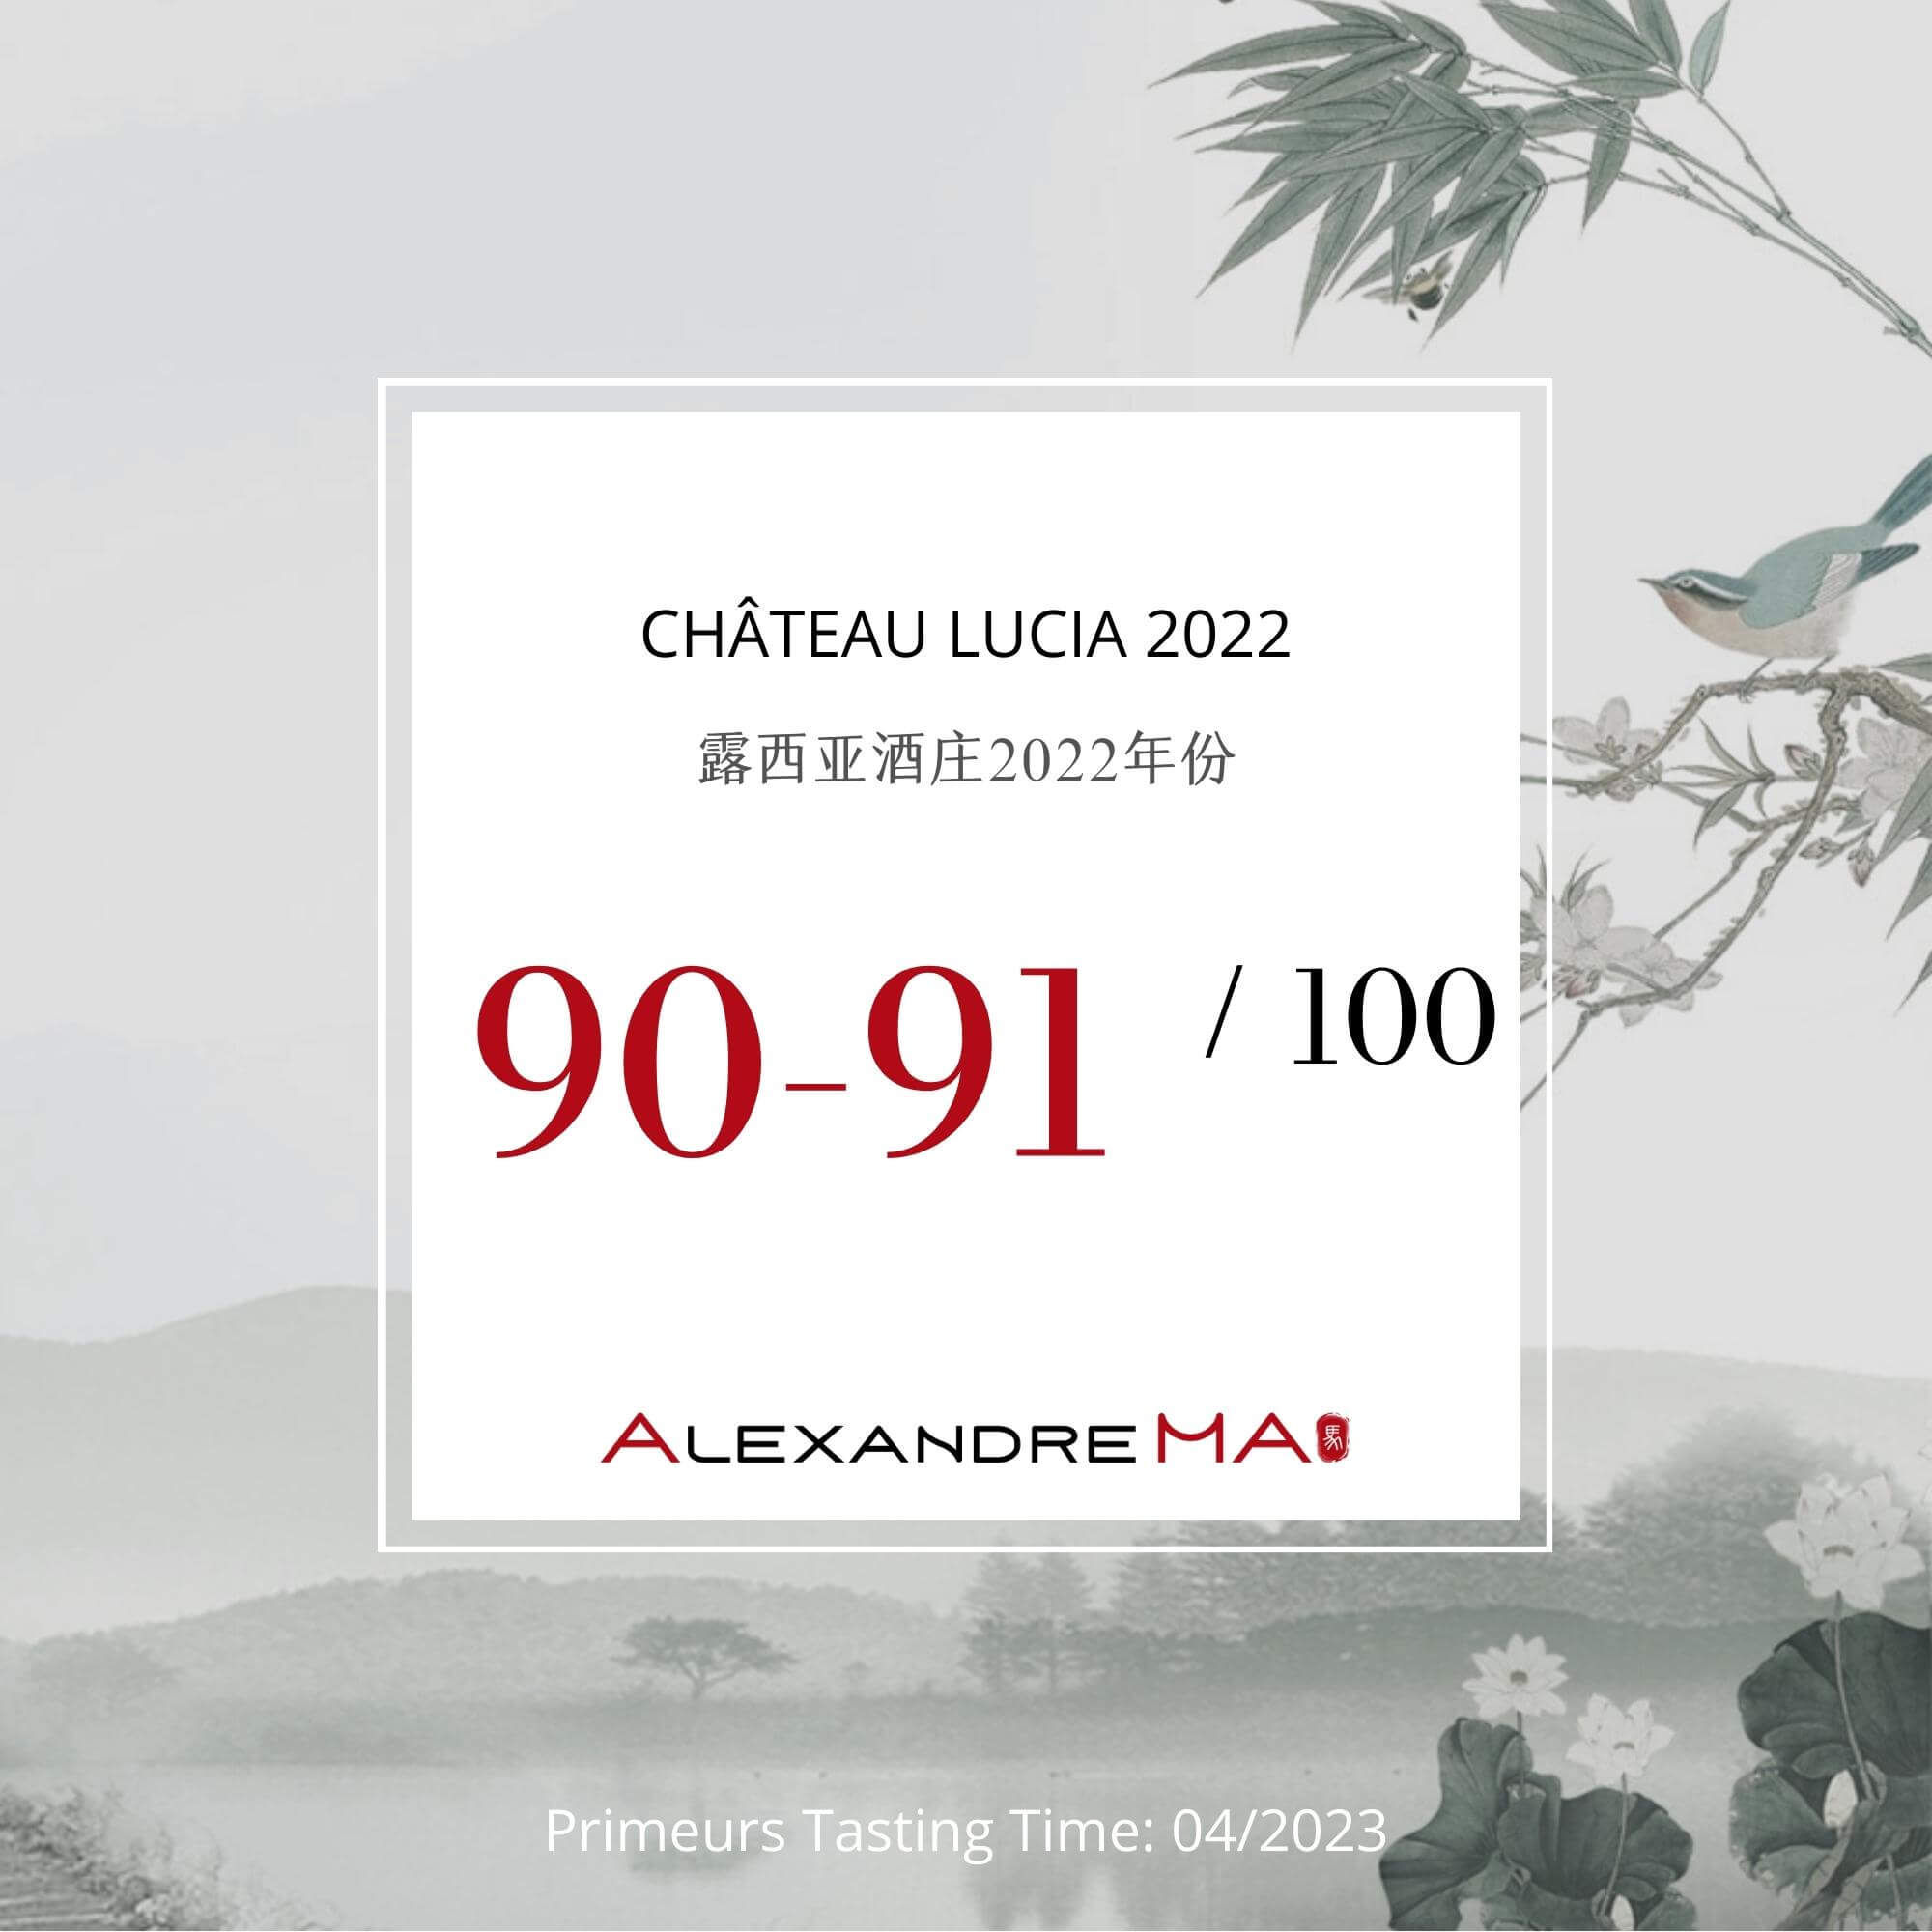 Château Lucia 2022 Primeurs - Alexandre MA